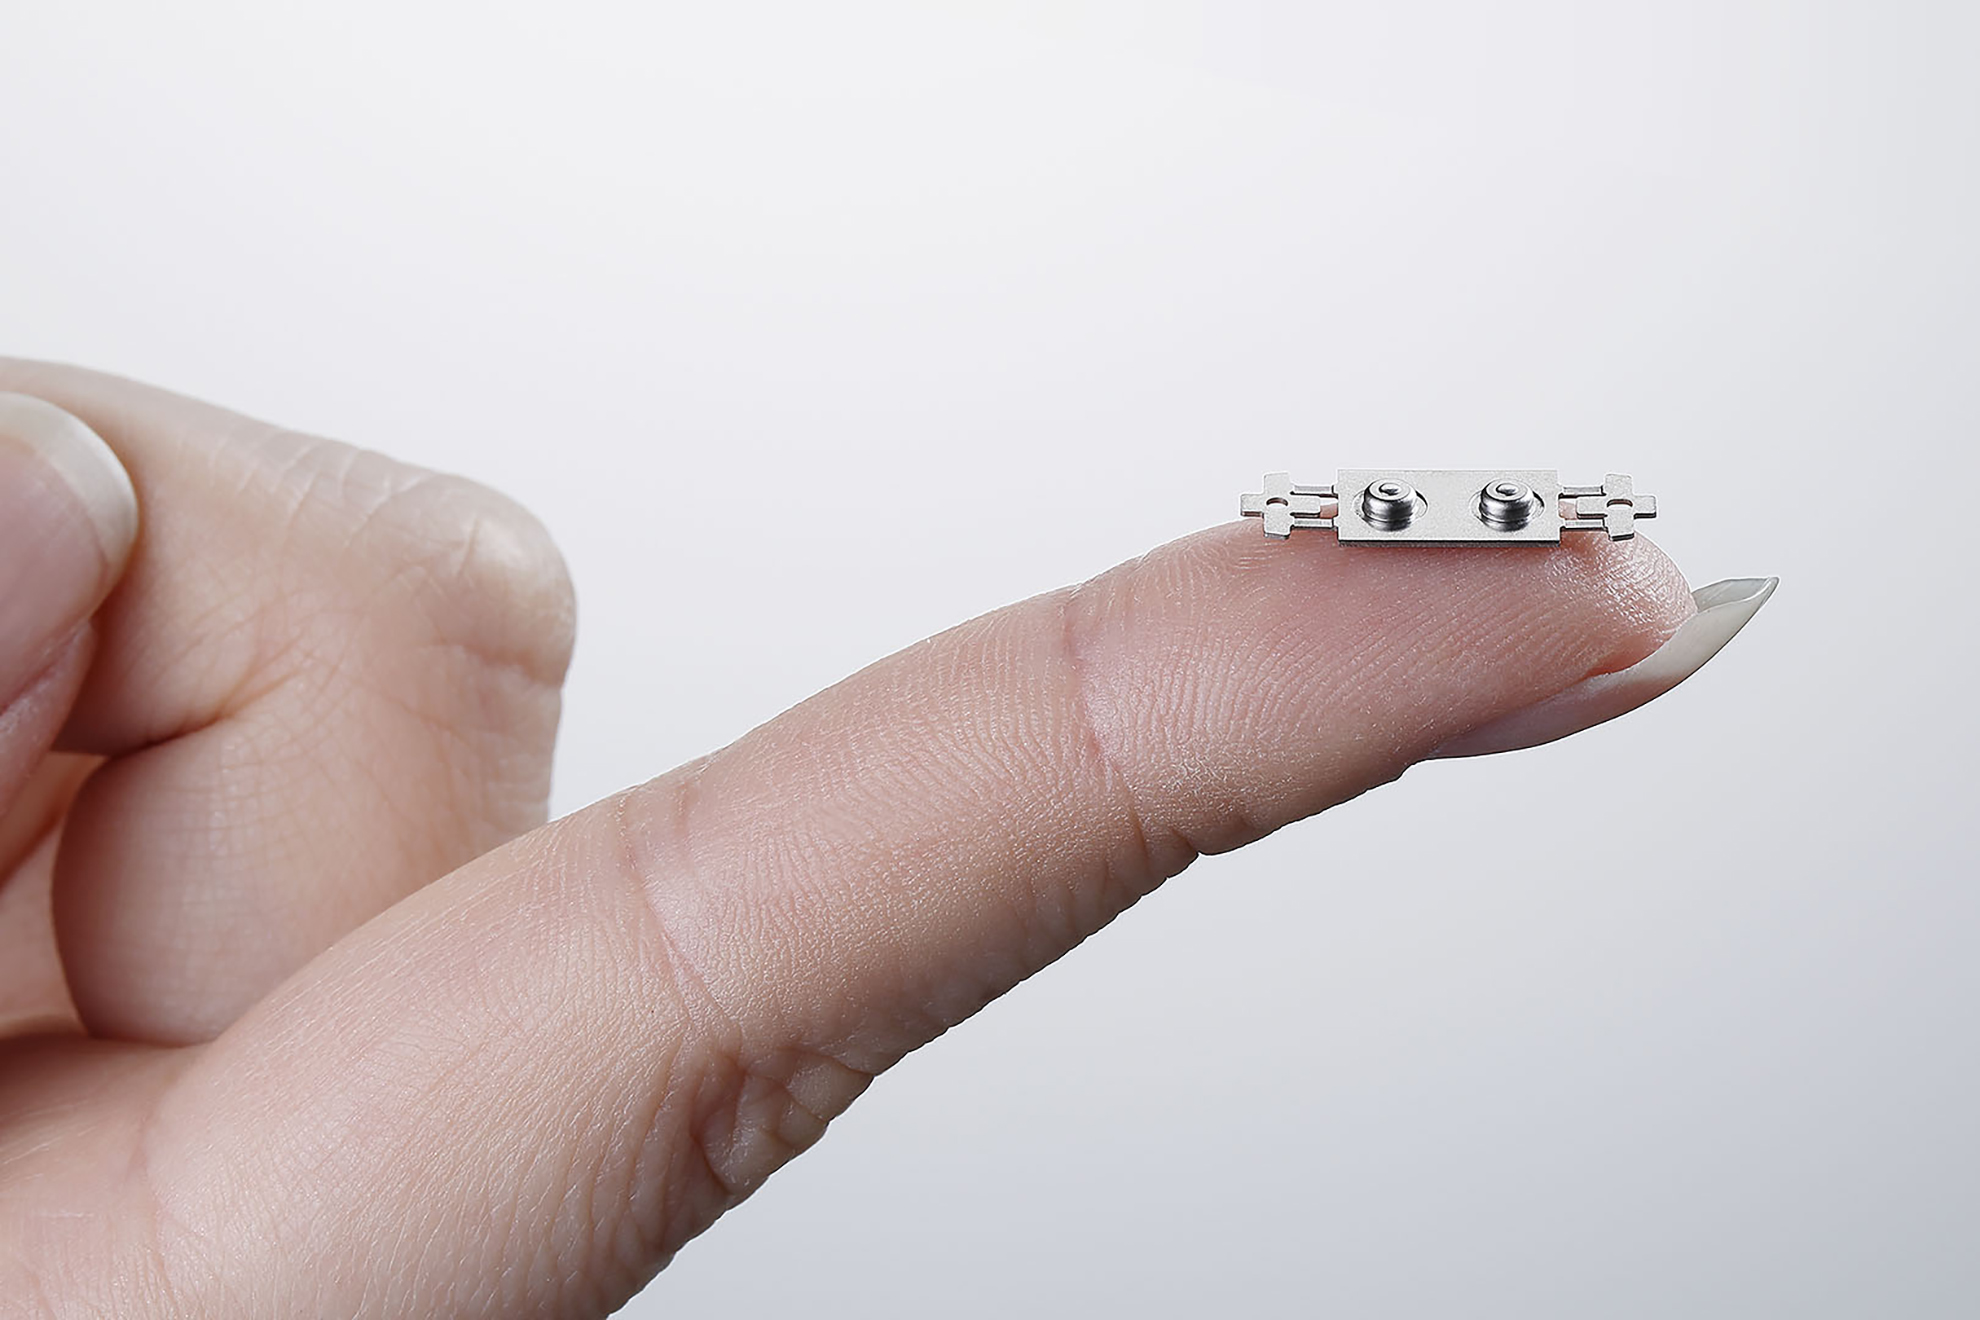 Nano USM technology shown on a finger